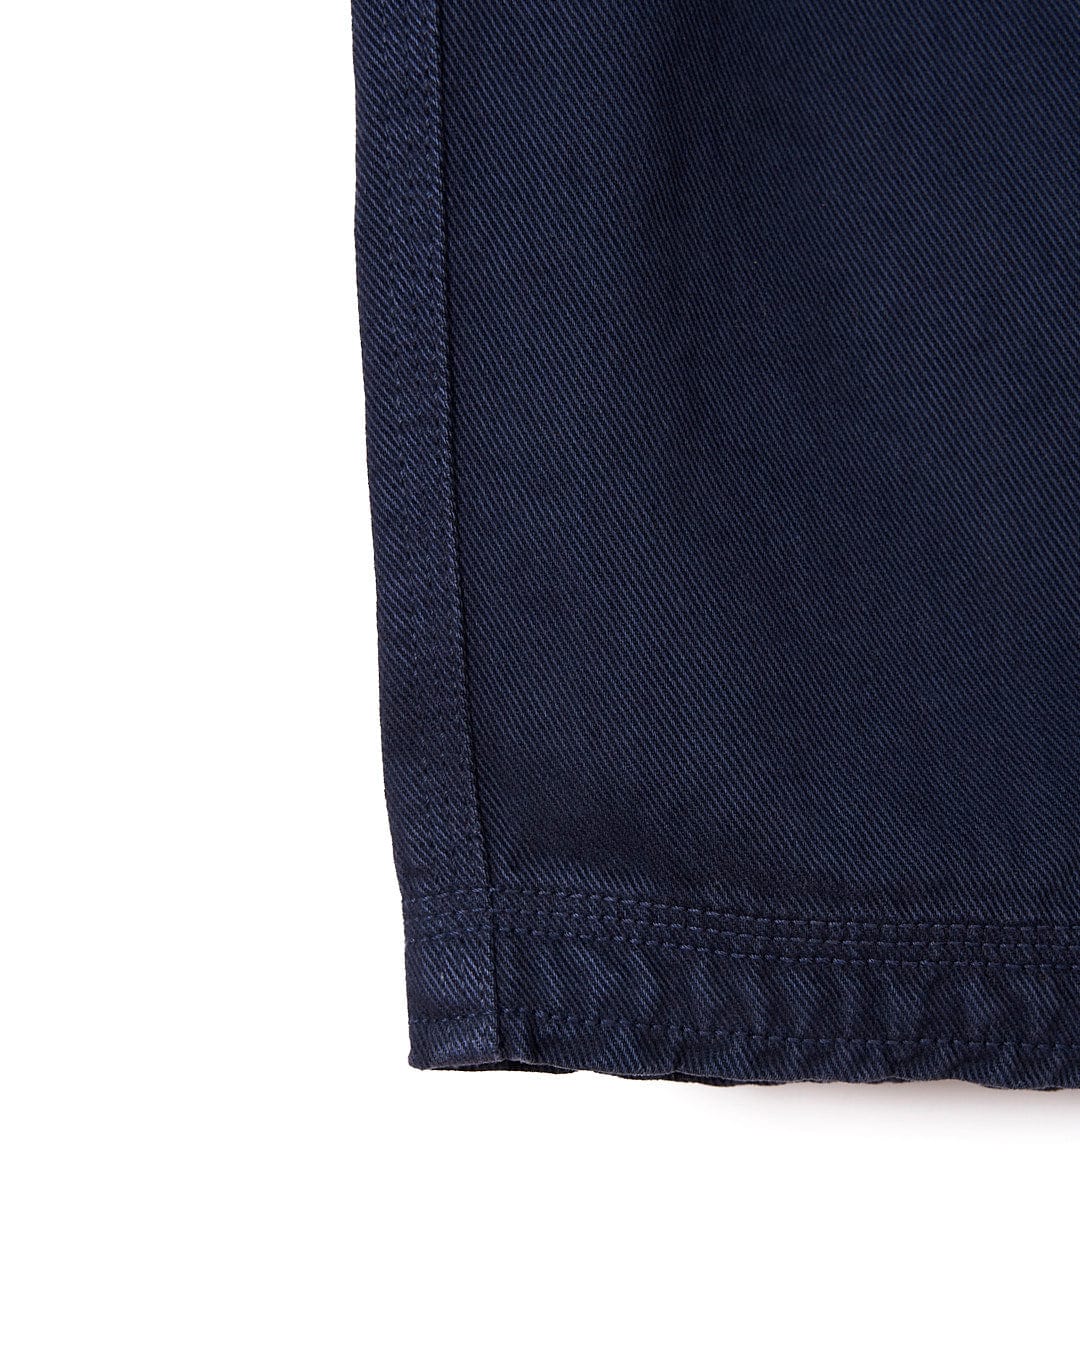 A close up of a Saltrock Meddon - Mens Twill Trouser - Blue shorts.